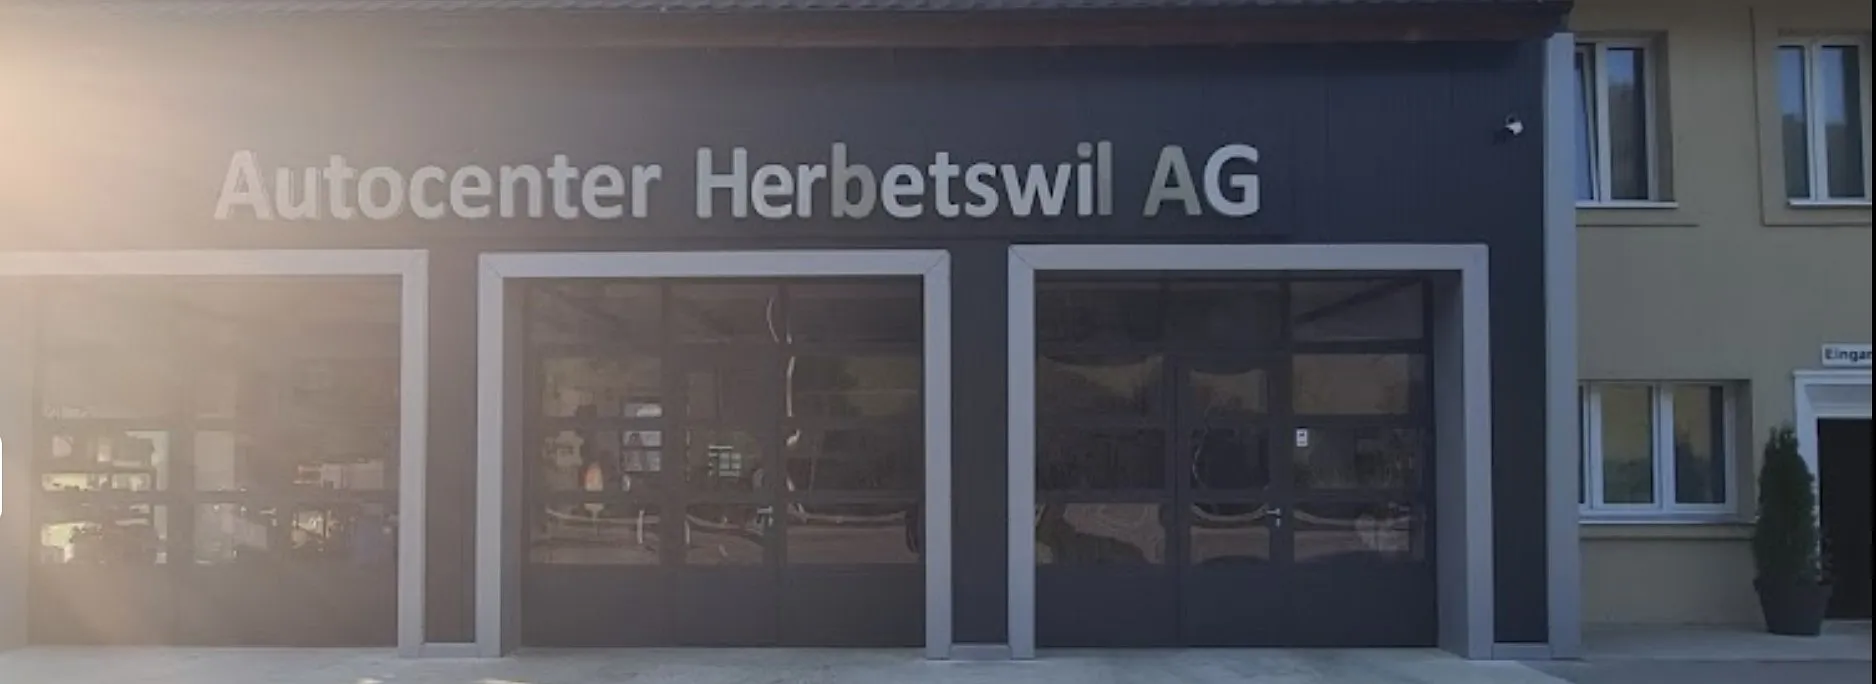 Autocenter Herbetswil AG